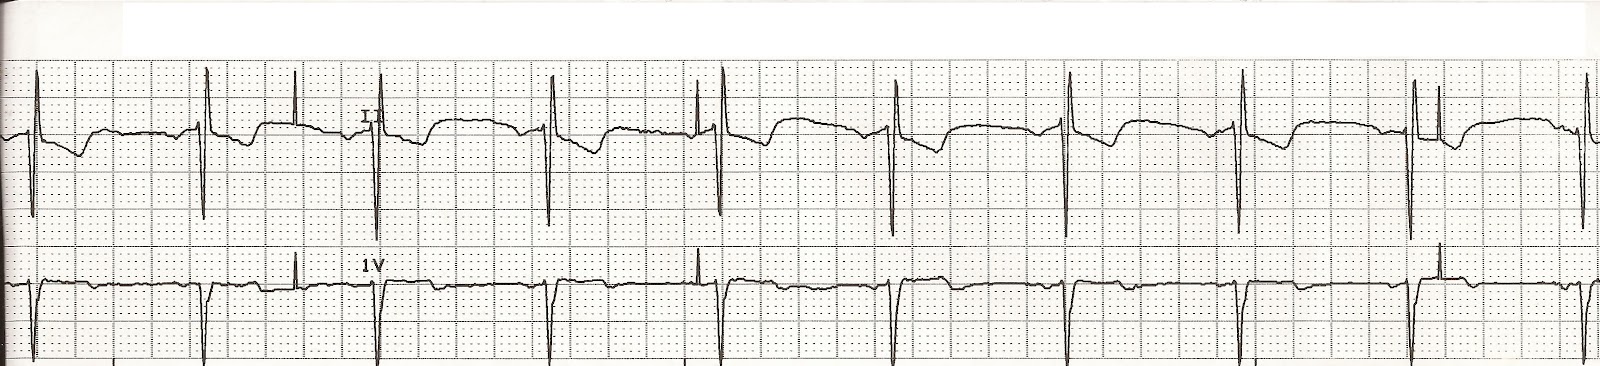 pacemaker failure to capture rhythm strip